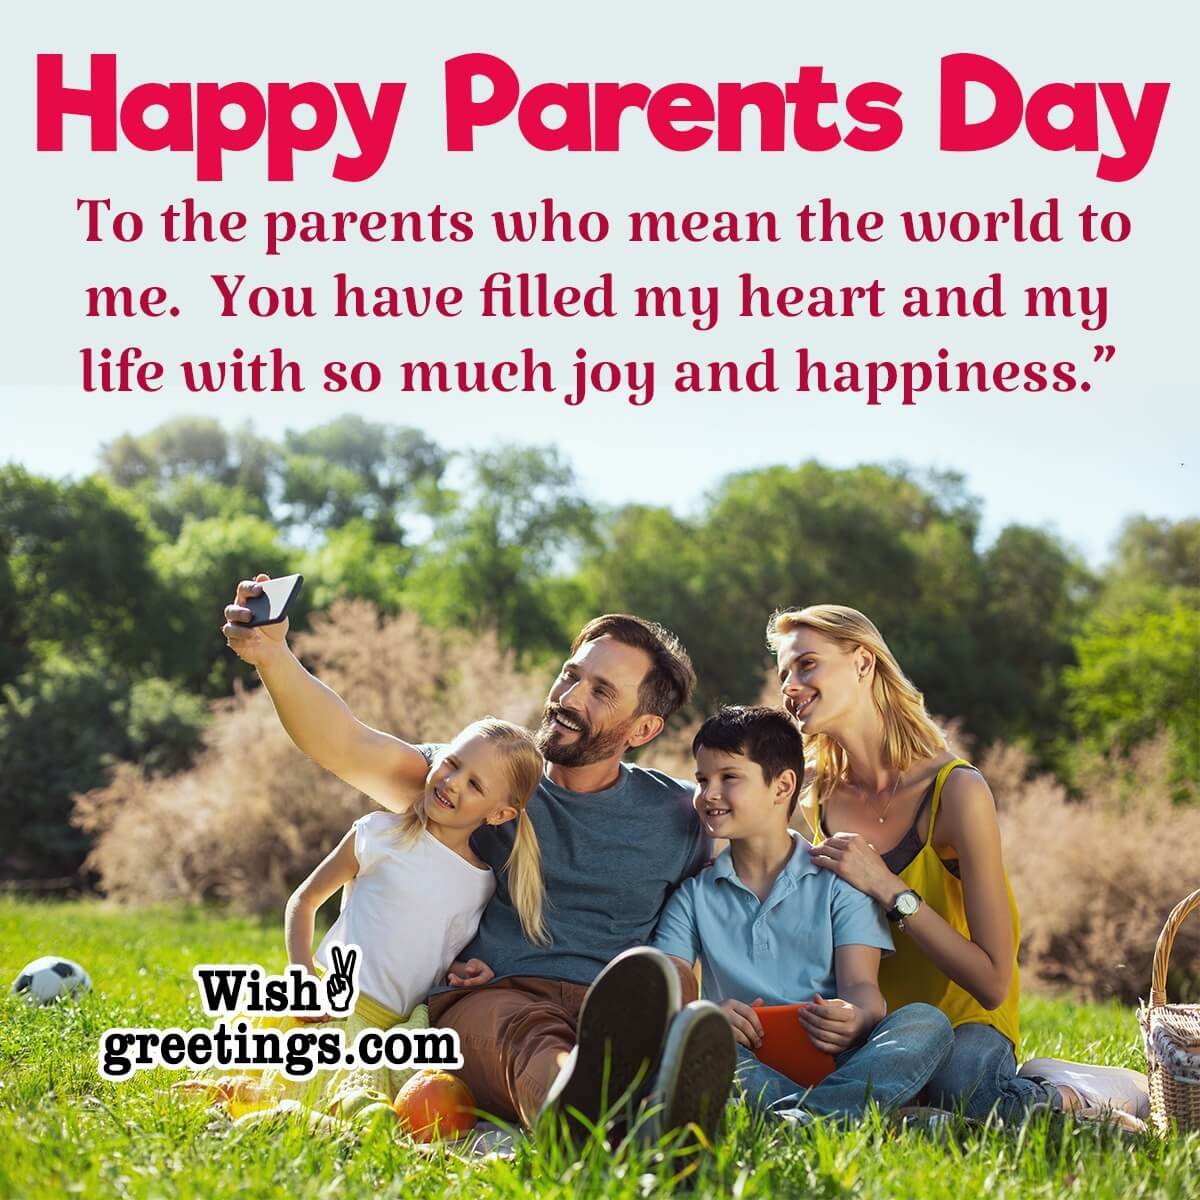 Happy Parents Day Messages